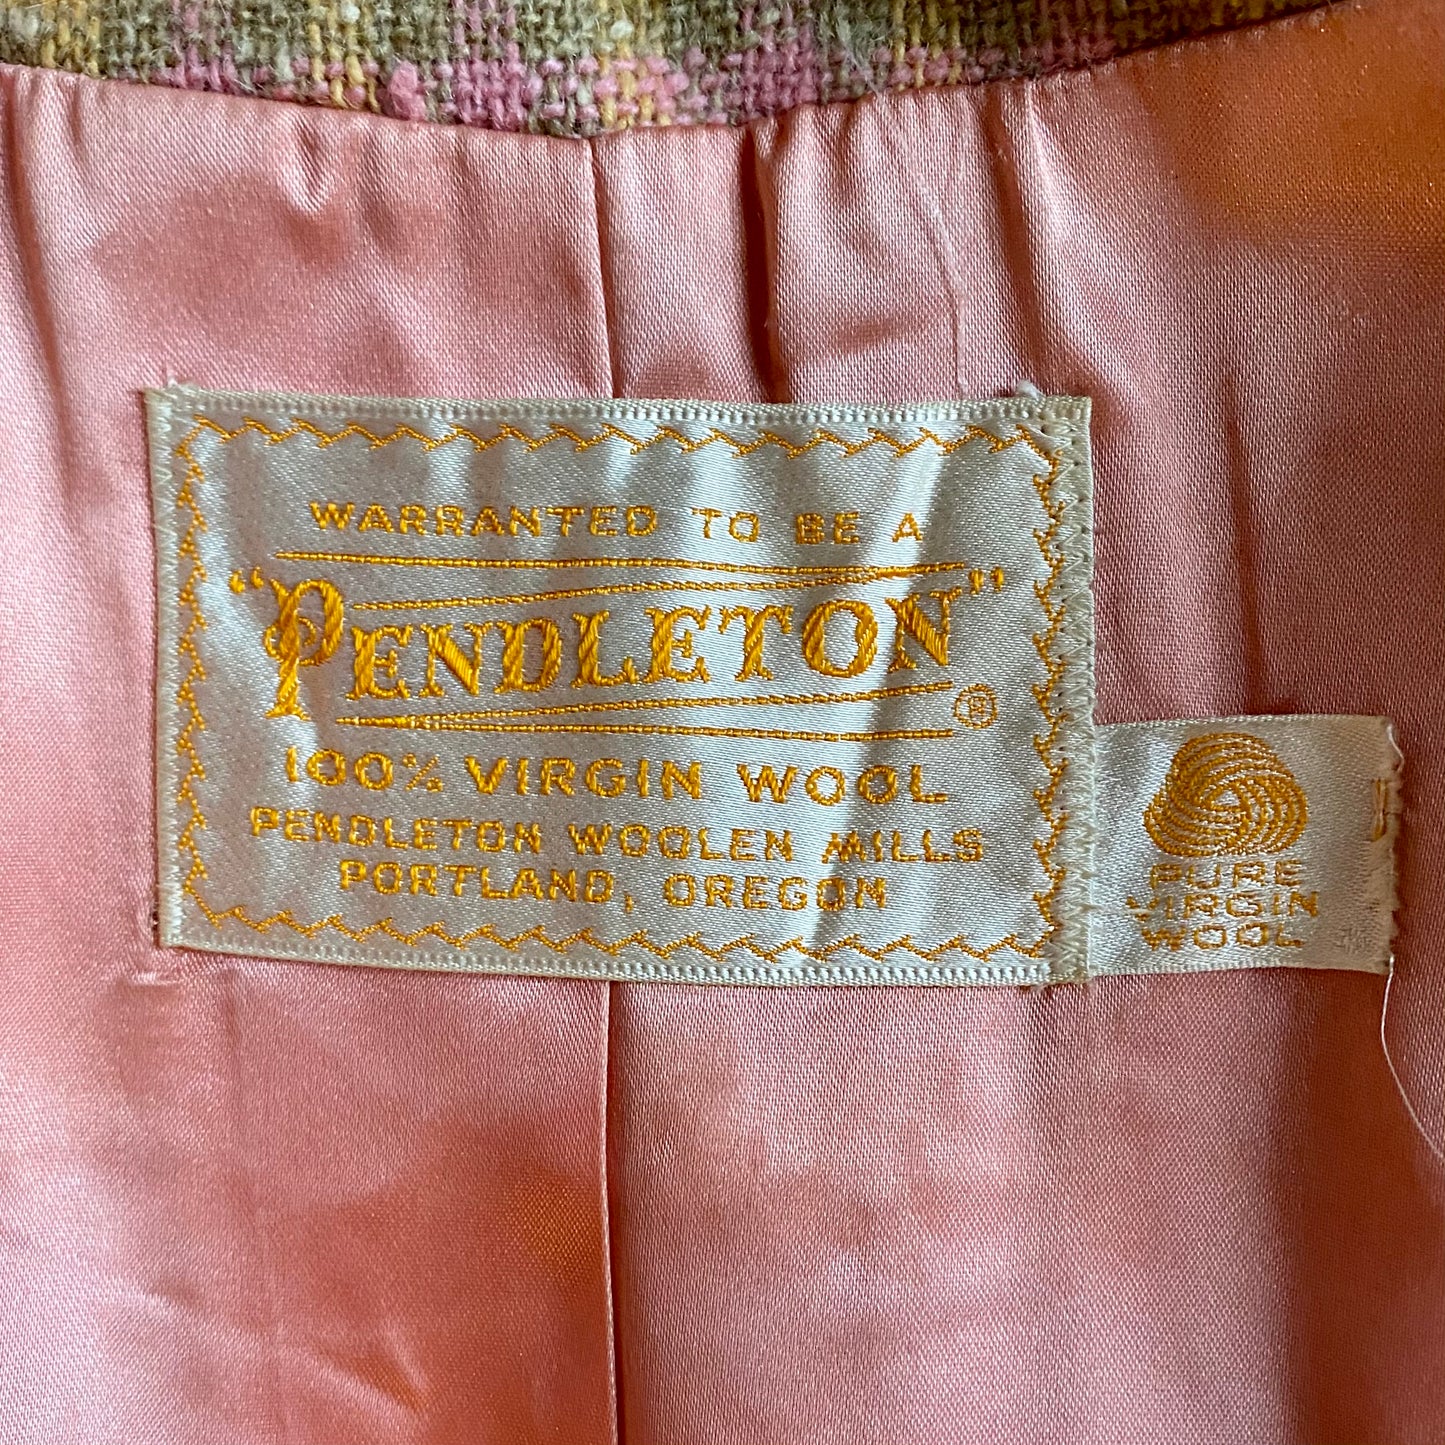 1960s Pendleton Plaid Wool Coat